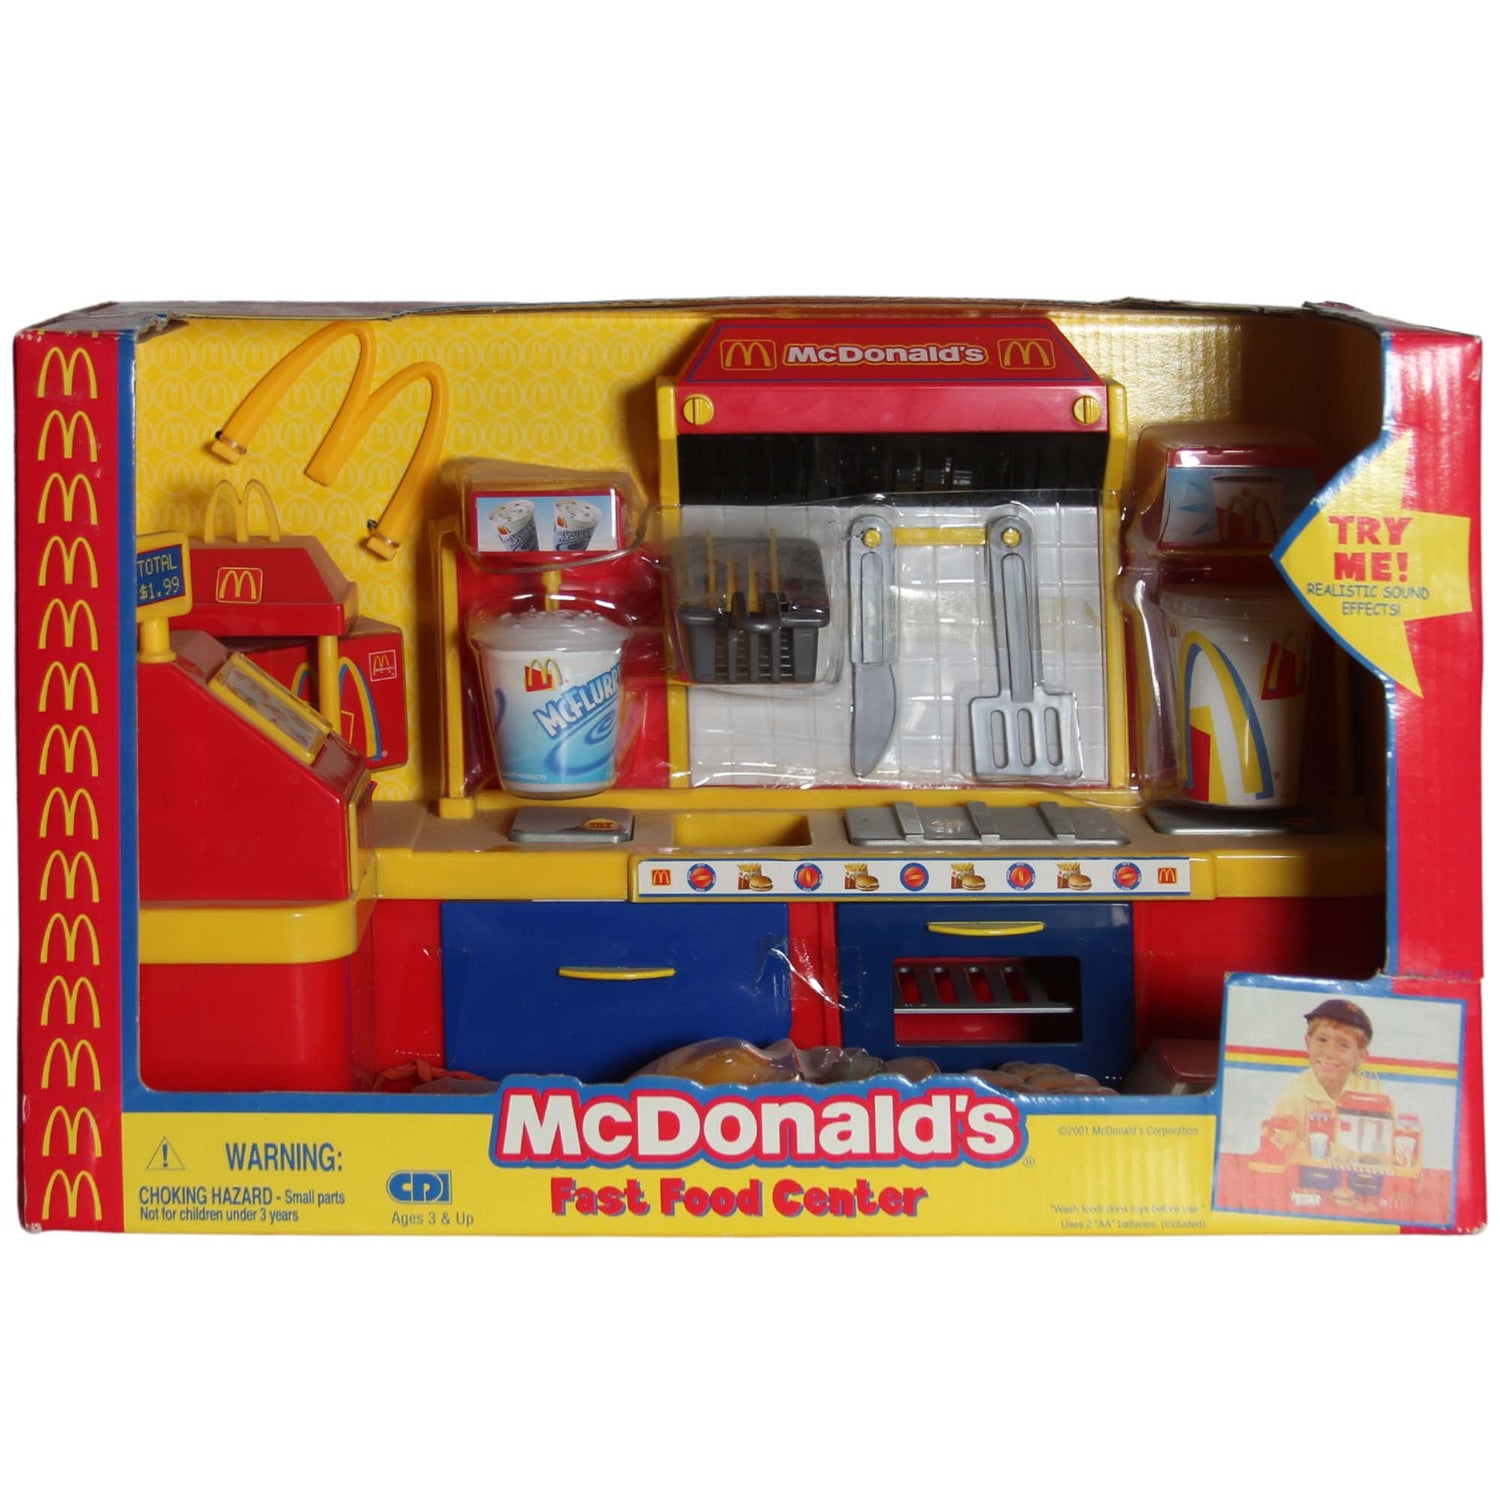 Vintage McDonalds Collection Original Box